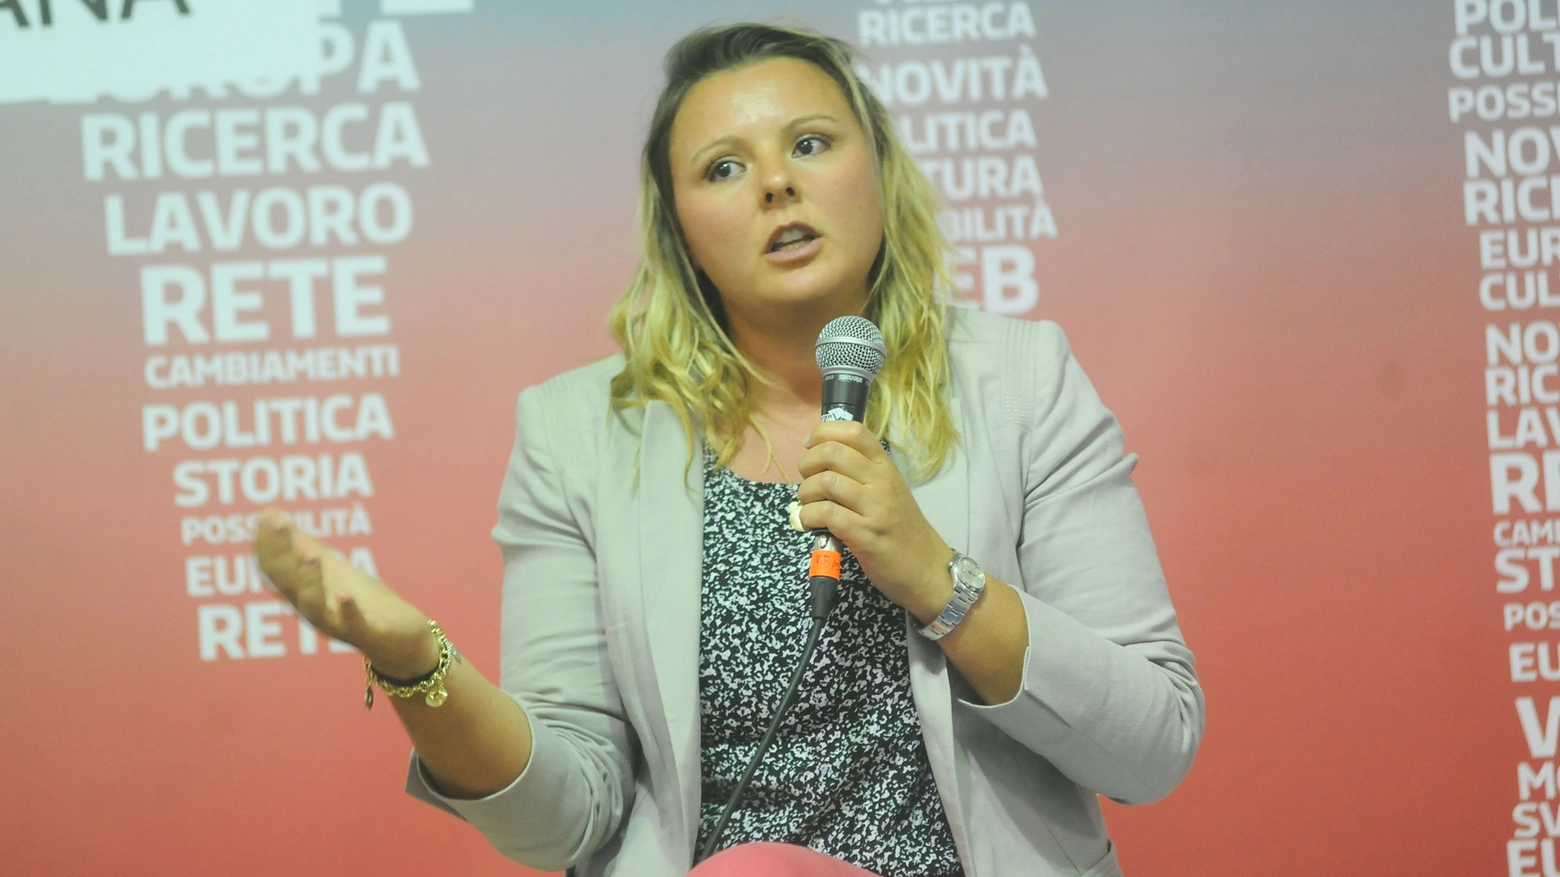  La general manager di Uber Italia, Benedetta Arese Lucini 